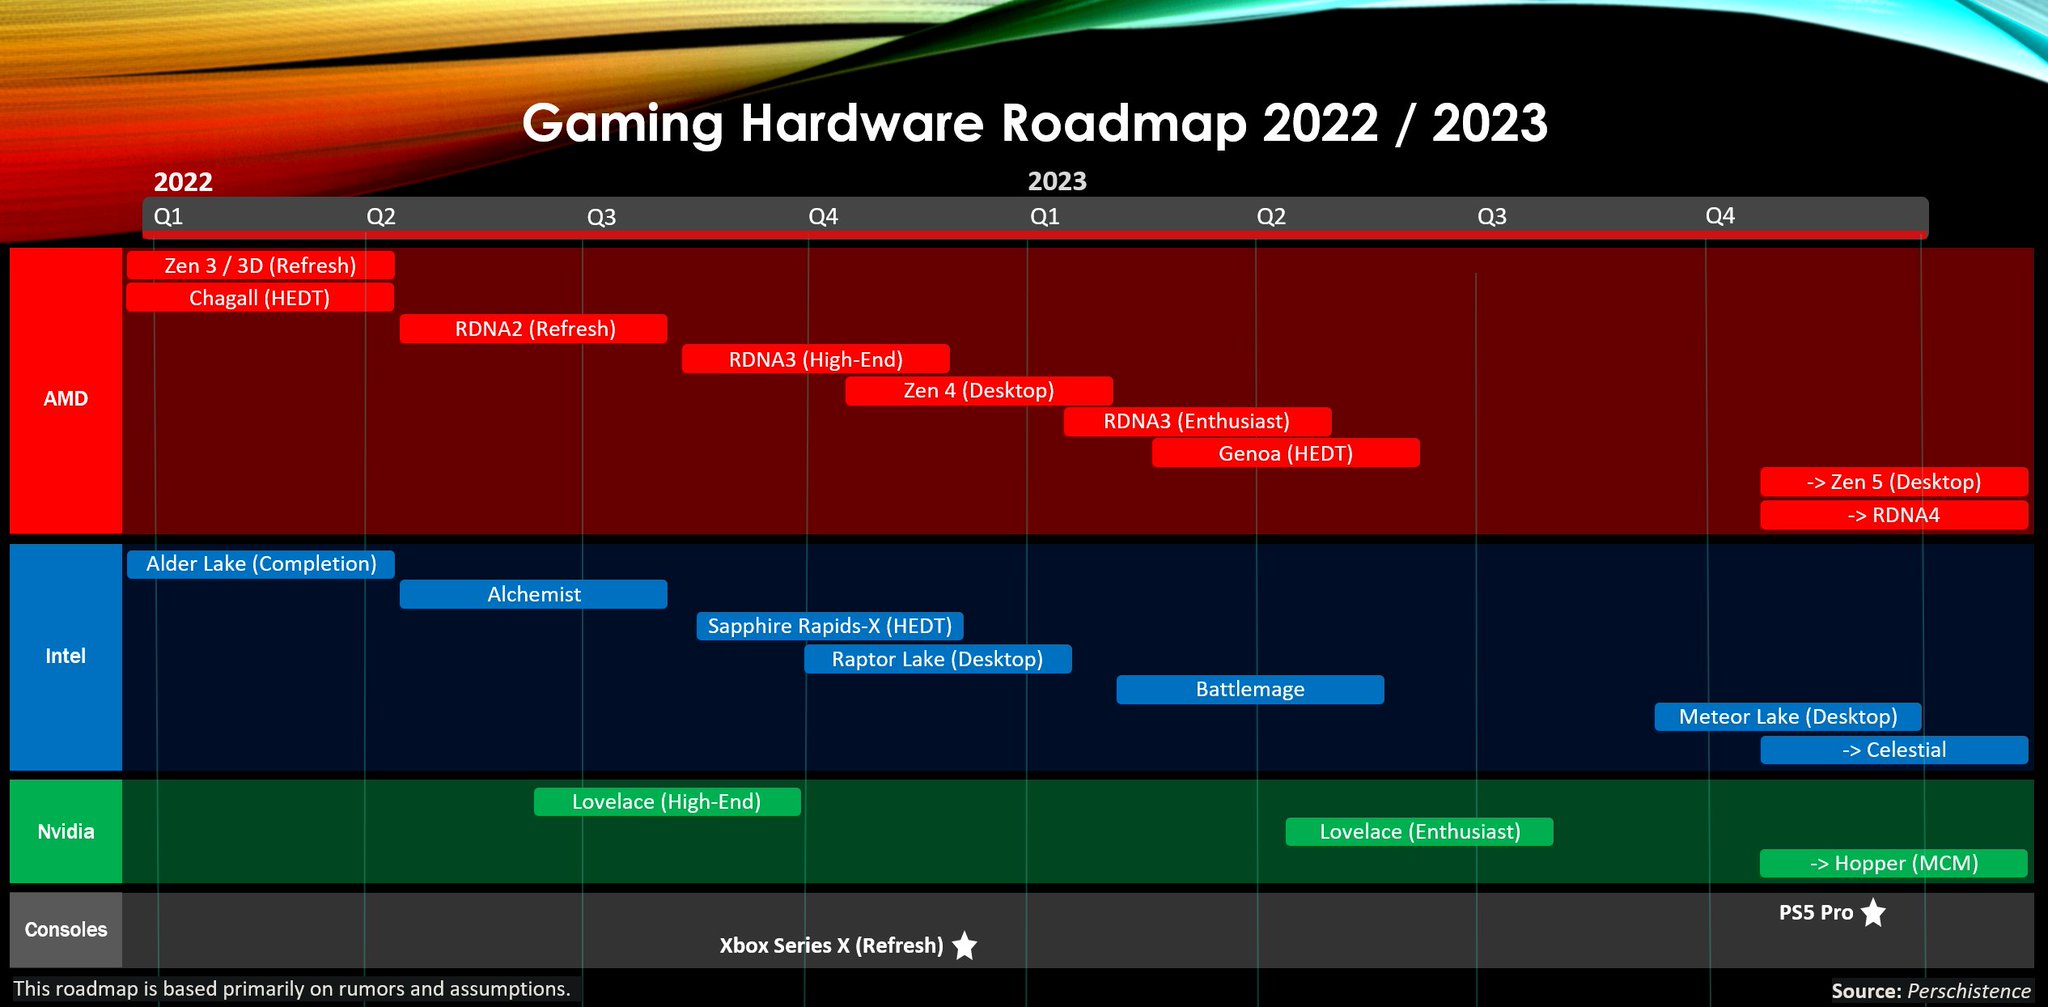 Perschistence on Twitter: "Gaming Hardware Roadmap 2022 / 2023 #intel, #amd, #nvidia, #leak, #battlemage (Speculative) / Twitter